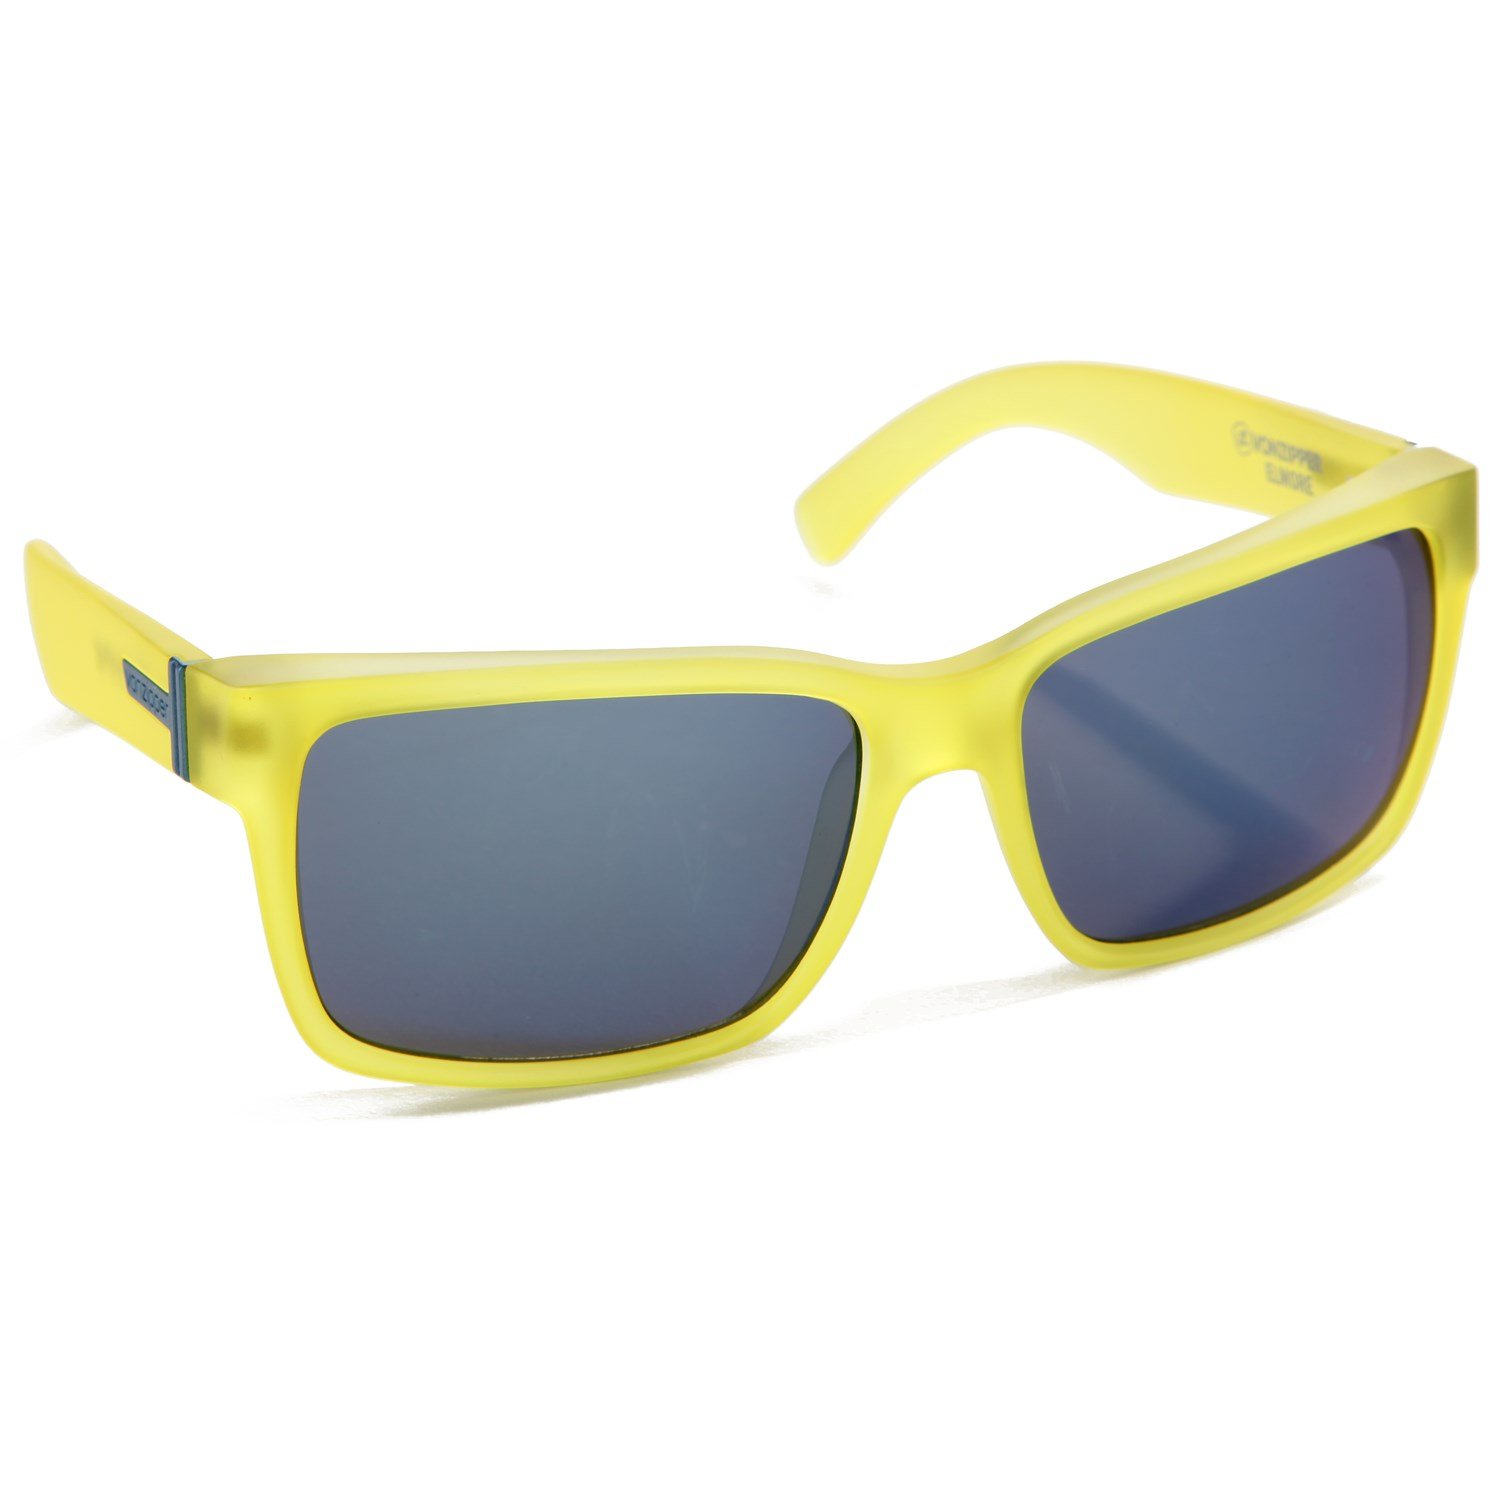 Von Zipper Spaceglaze Limited Edition Elmore Sunglasses | evo